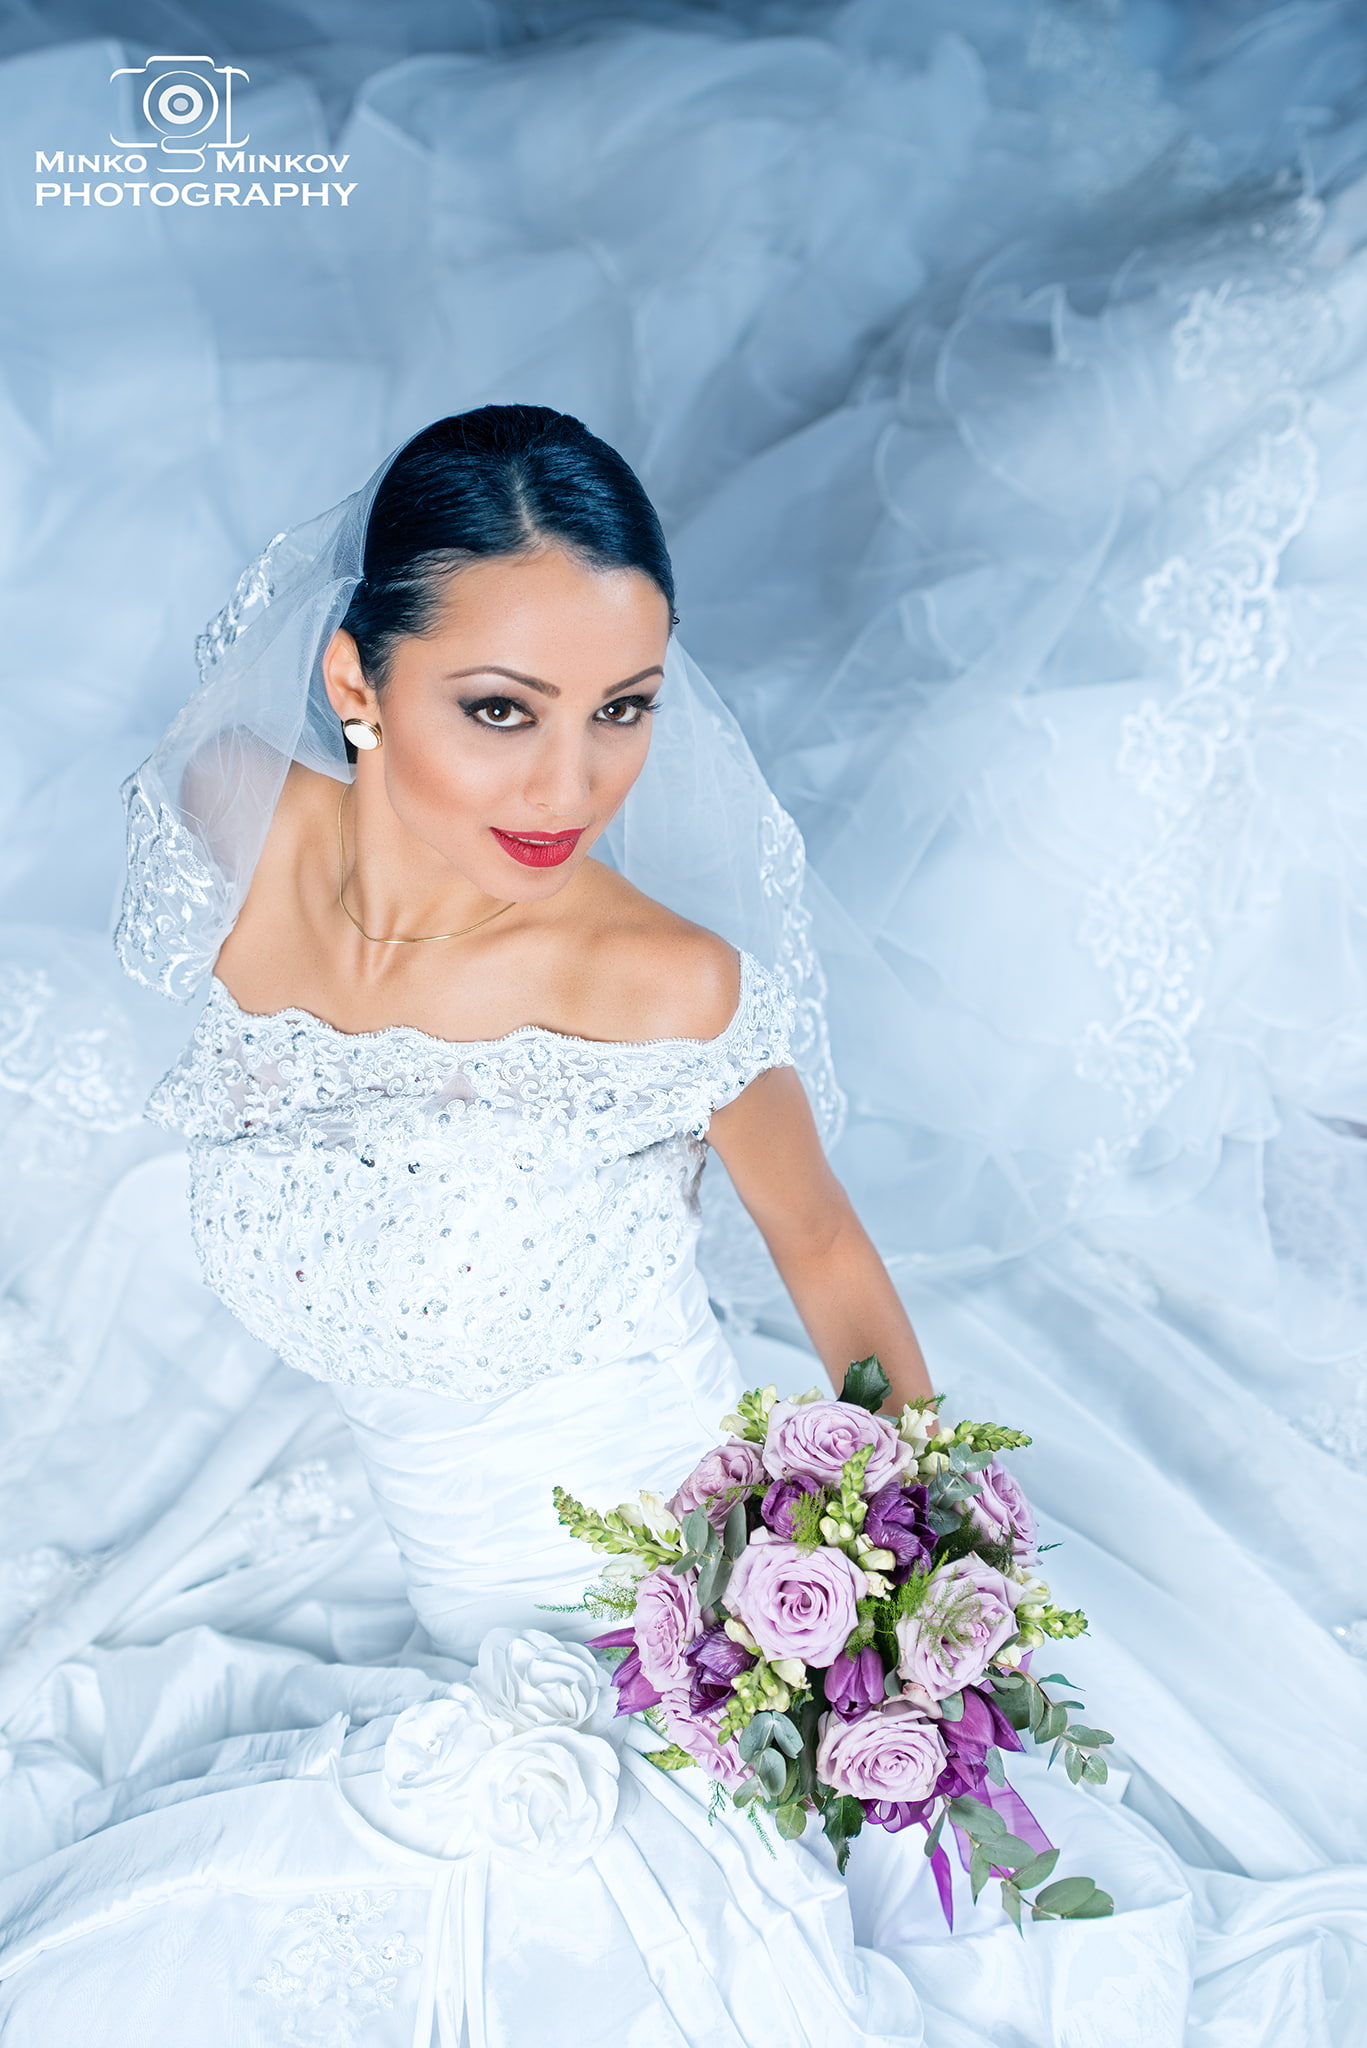 Minko Minkov, women, white dress, sensual gaze, brides, frock